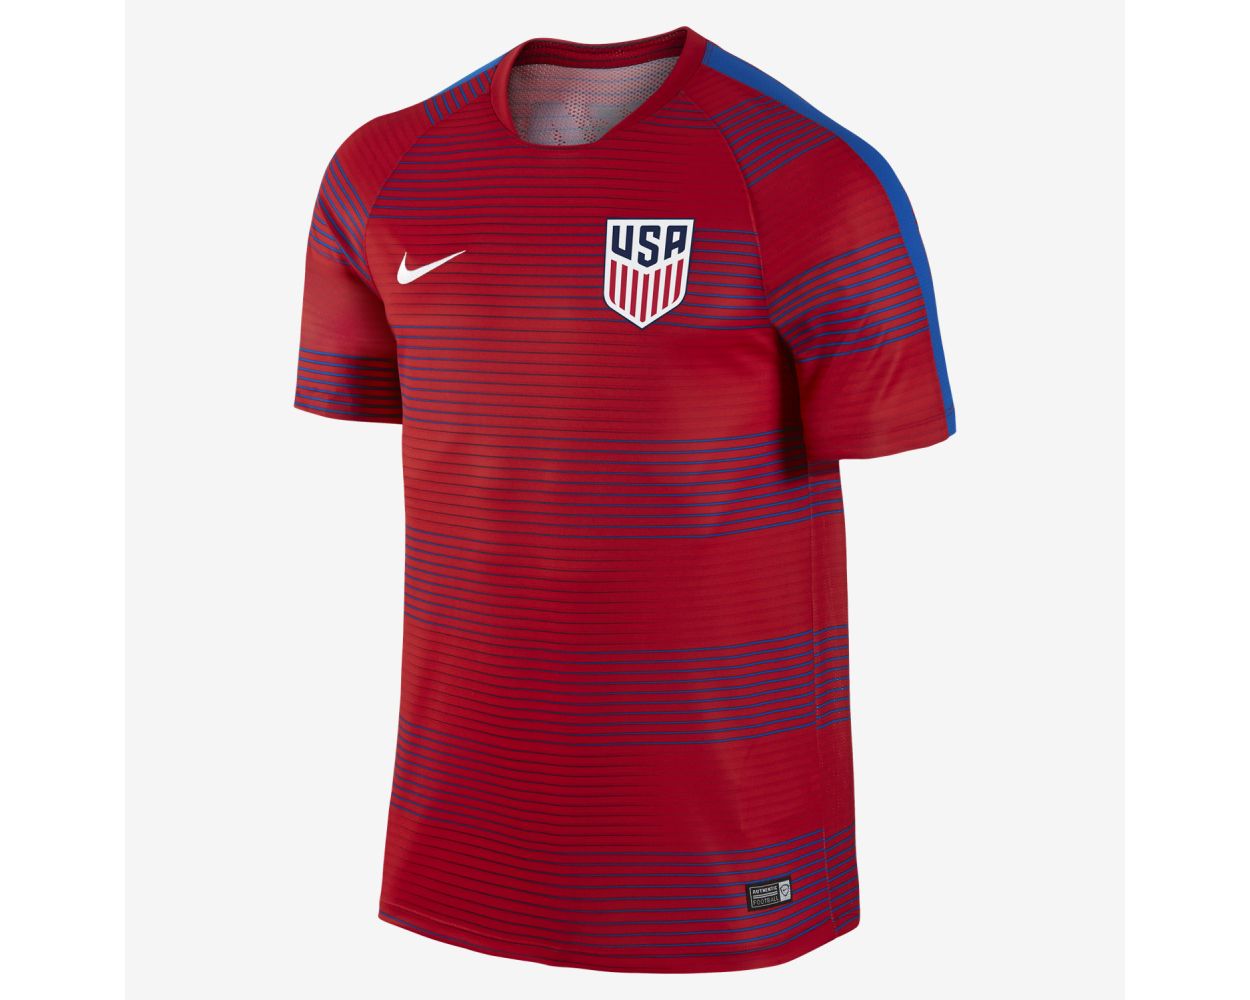 Nike USA Flash Pre-Match 2 Jersey 2016/17 - Red